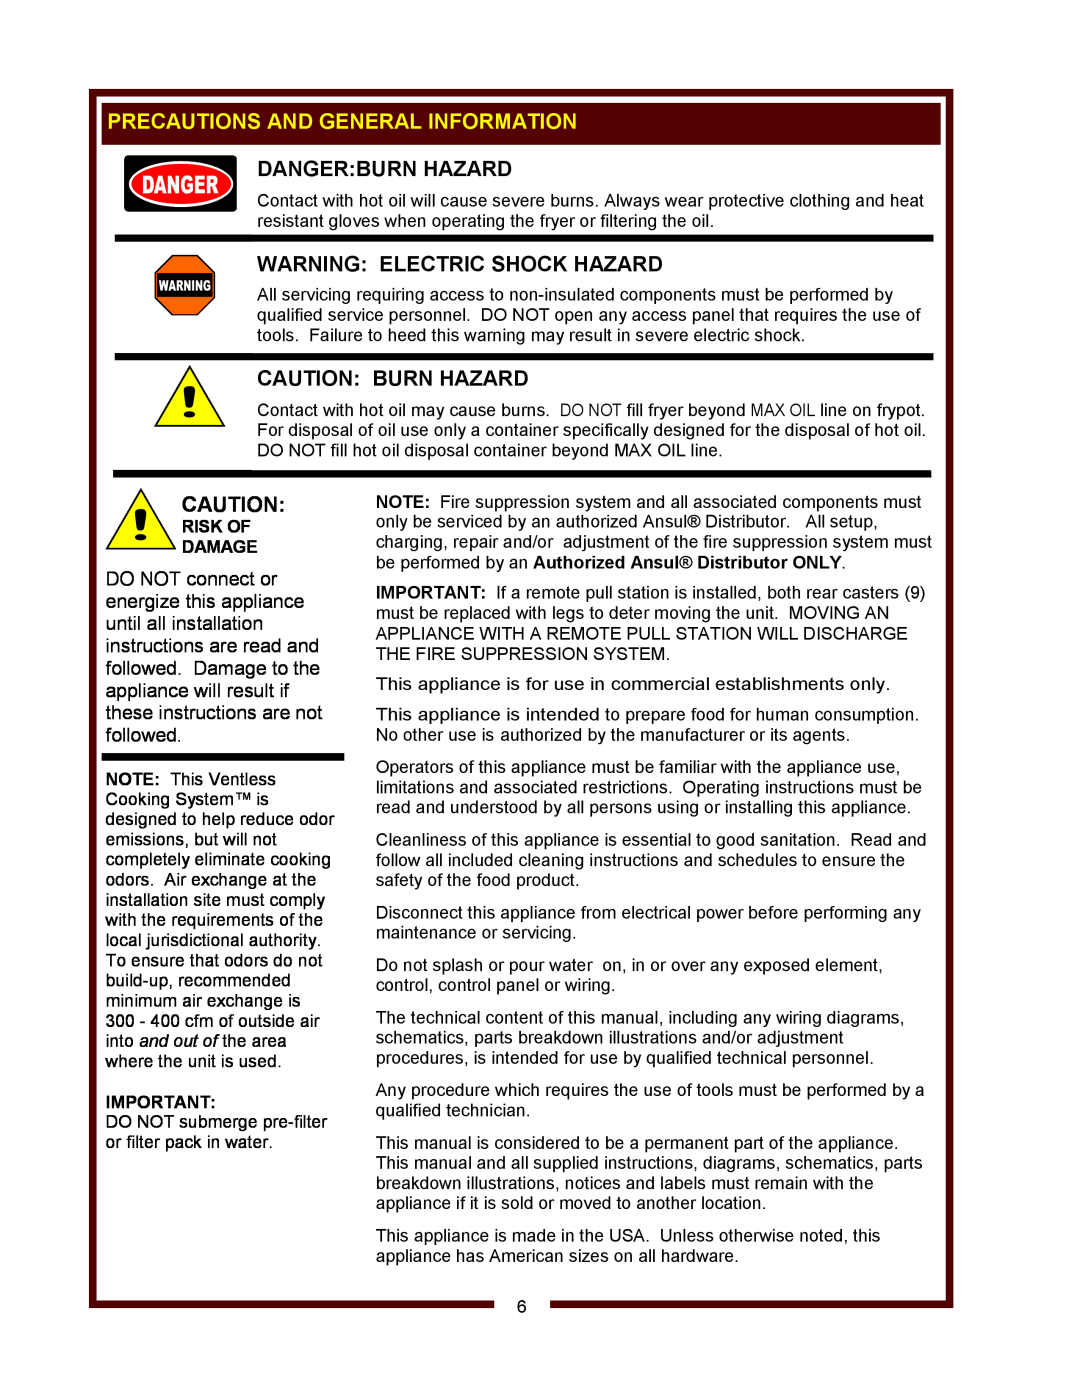 Wells WVF-886 Precautions And General Information, Dangerburn Hazard, Warning Electric Shock Hazard, Caution Burn Hazard 